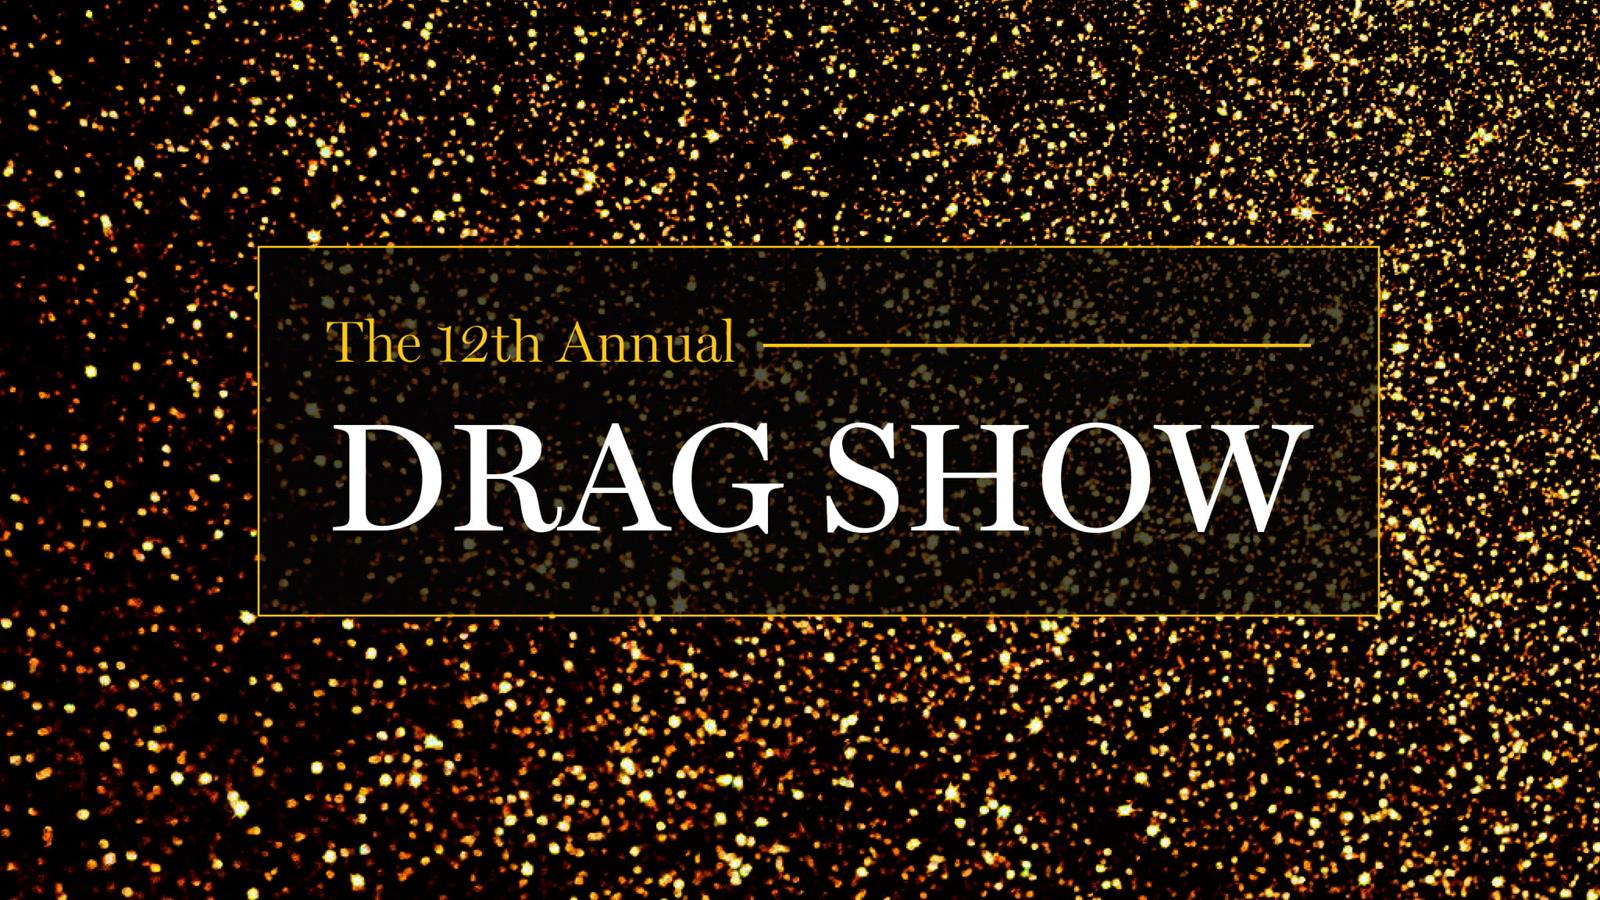 Drexel Drag Show Event